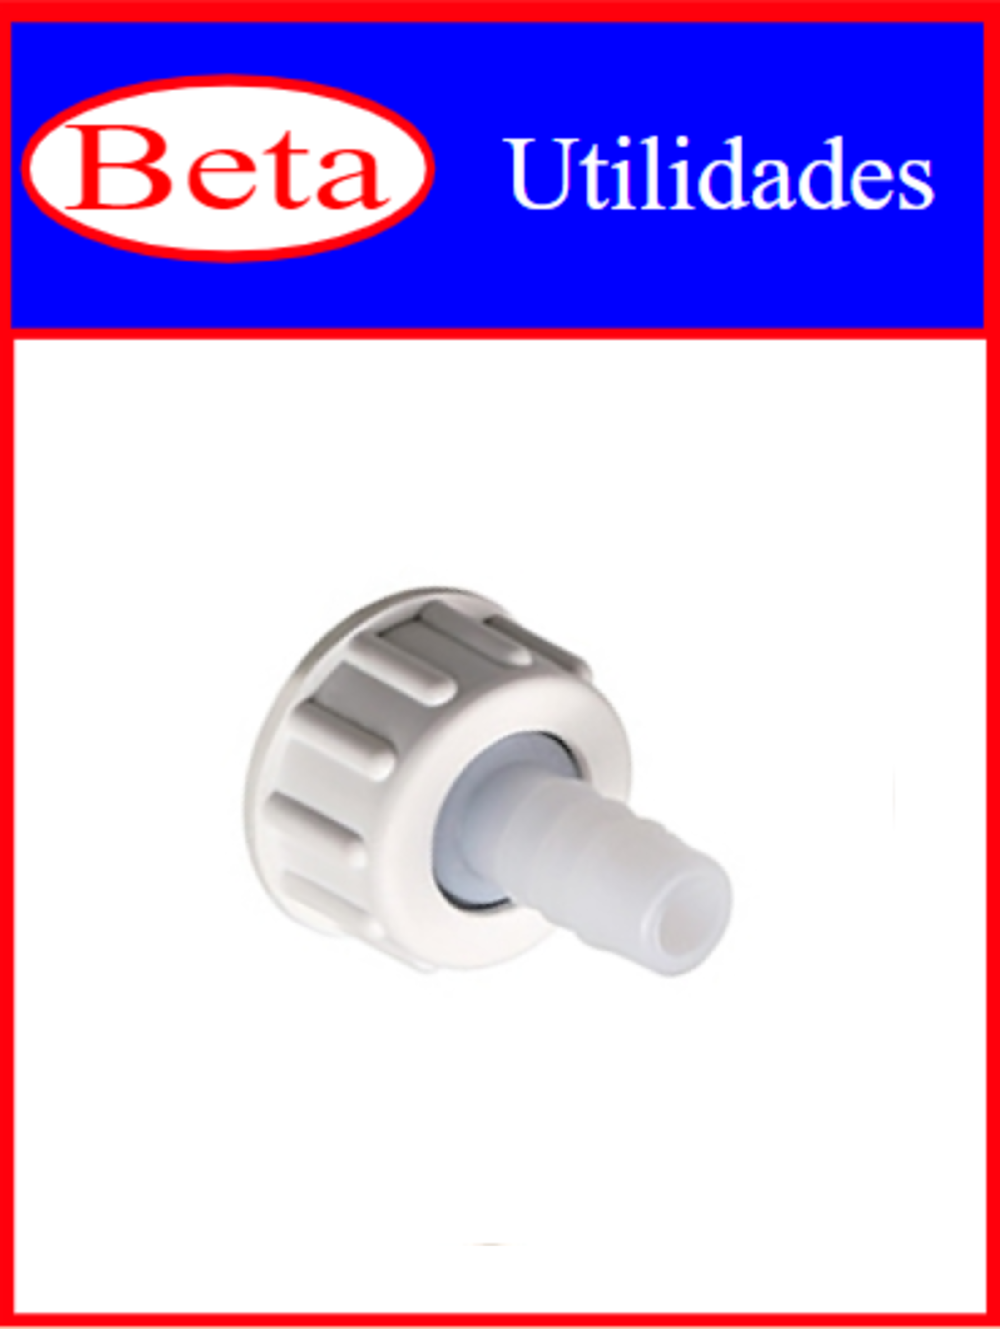 7898021401431 - BICO PVC P/ TORNEIRA 3/4 BETA UTILID